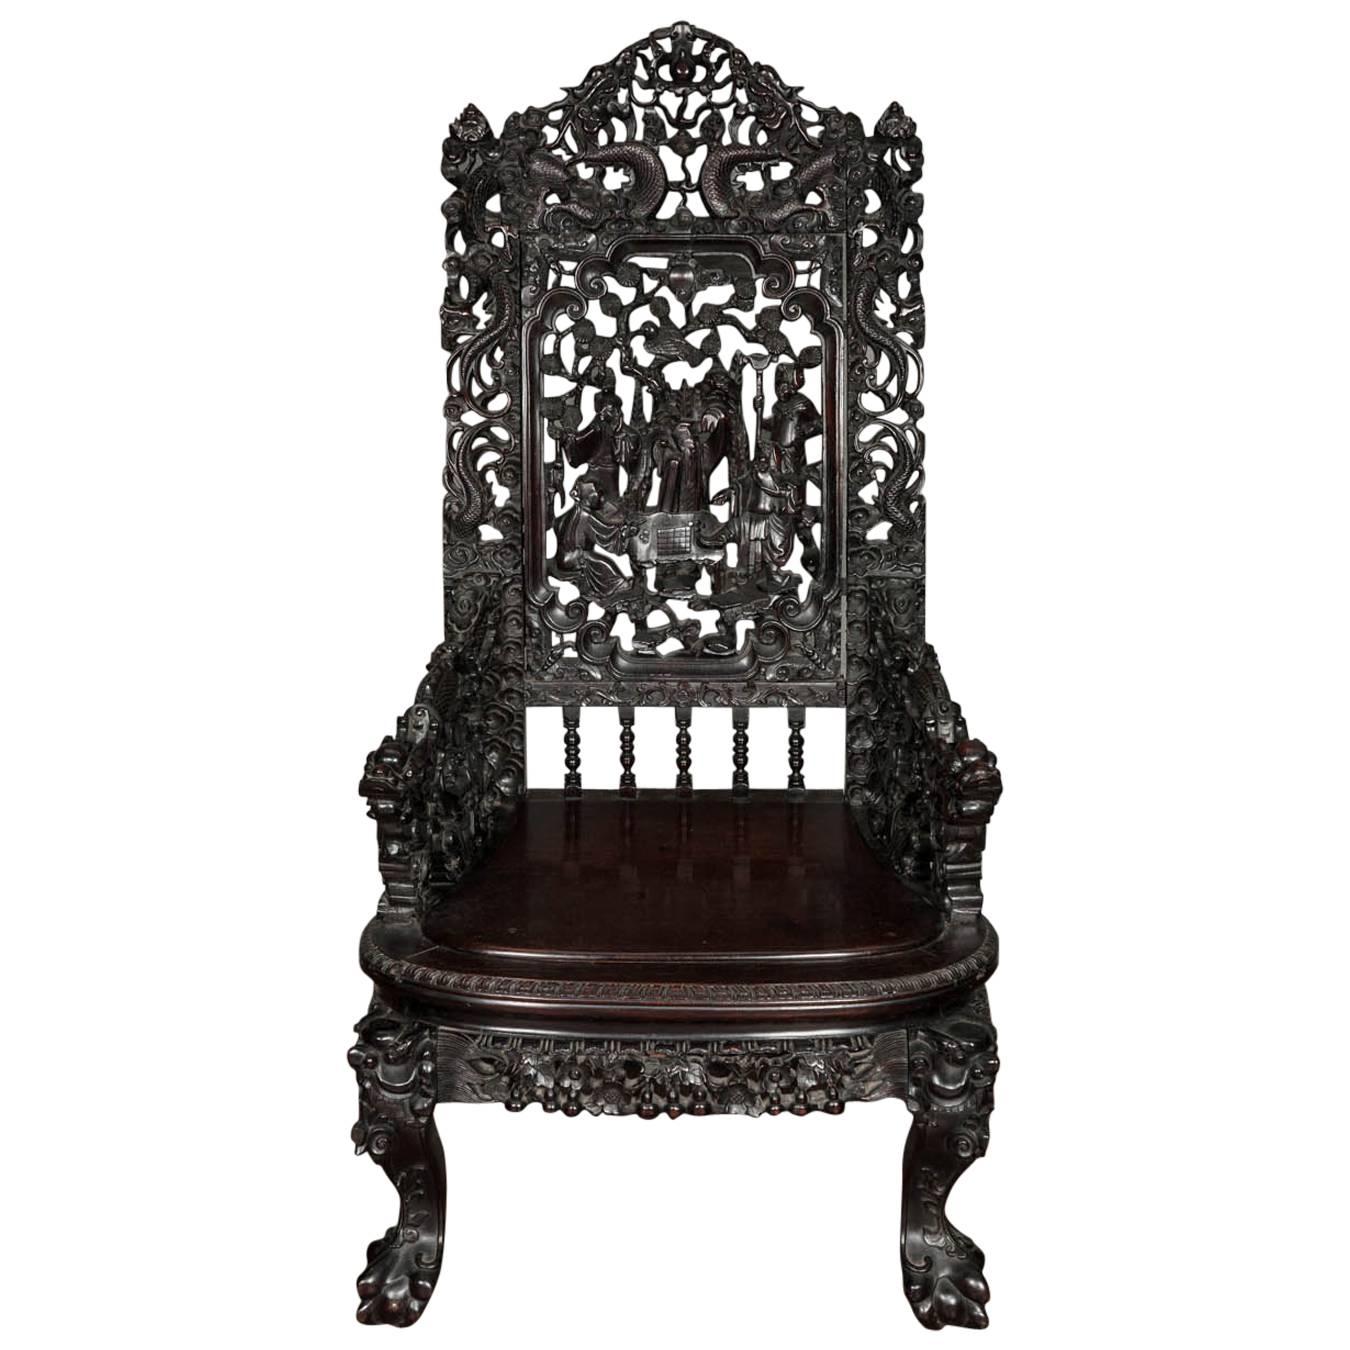 19th Century Chinese Hardwood Armchair